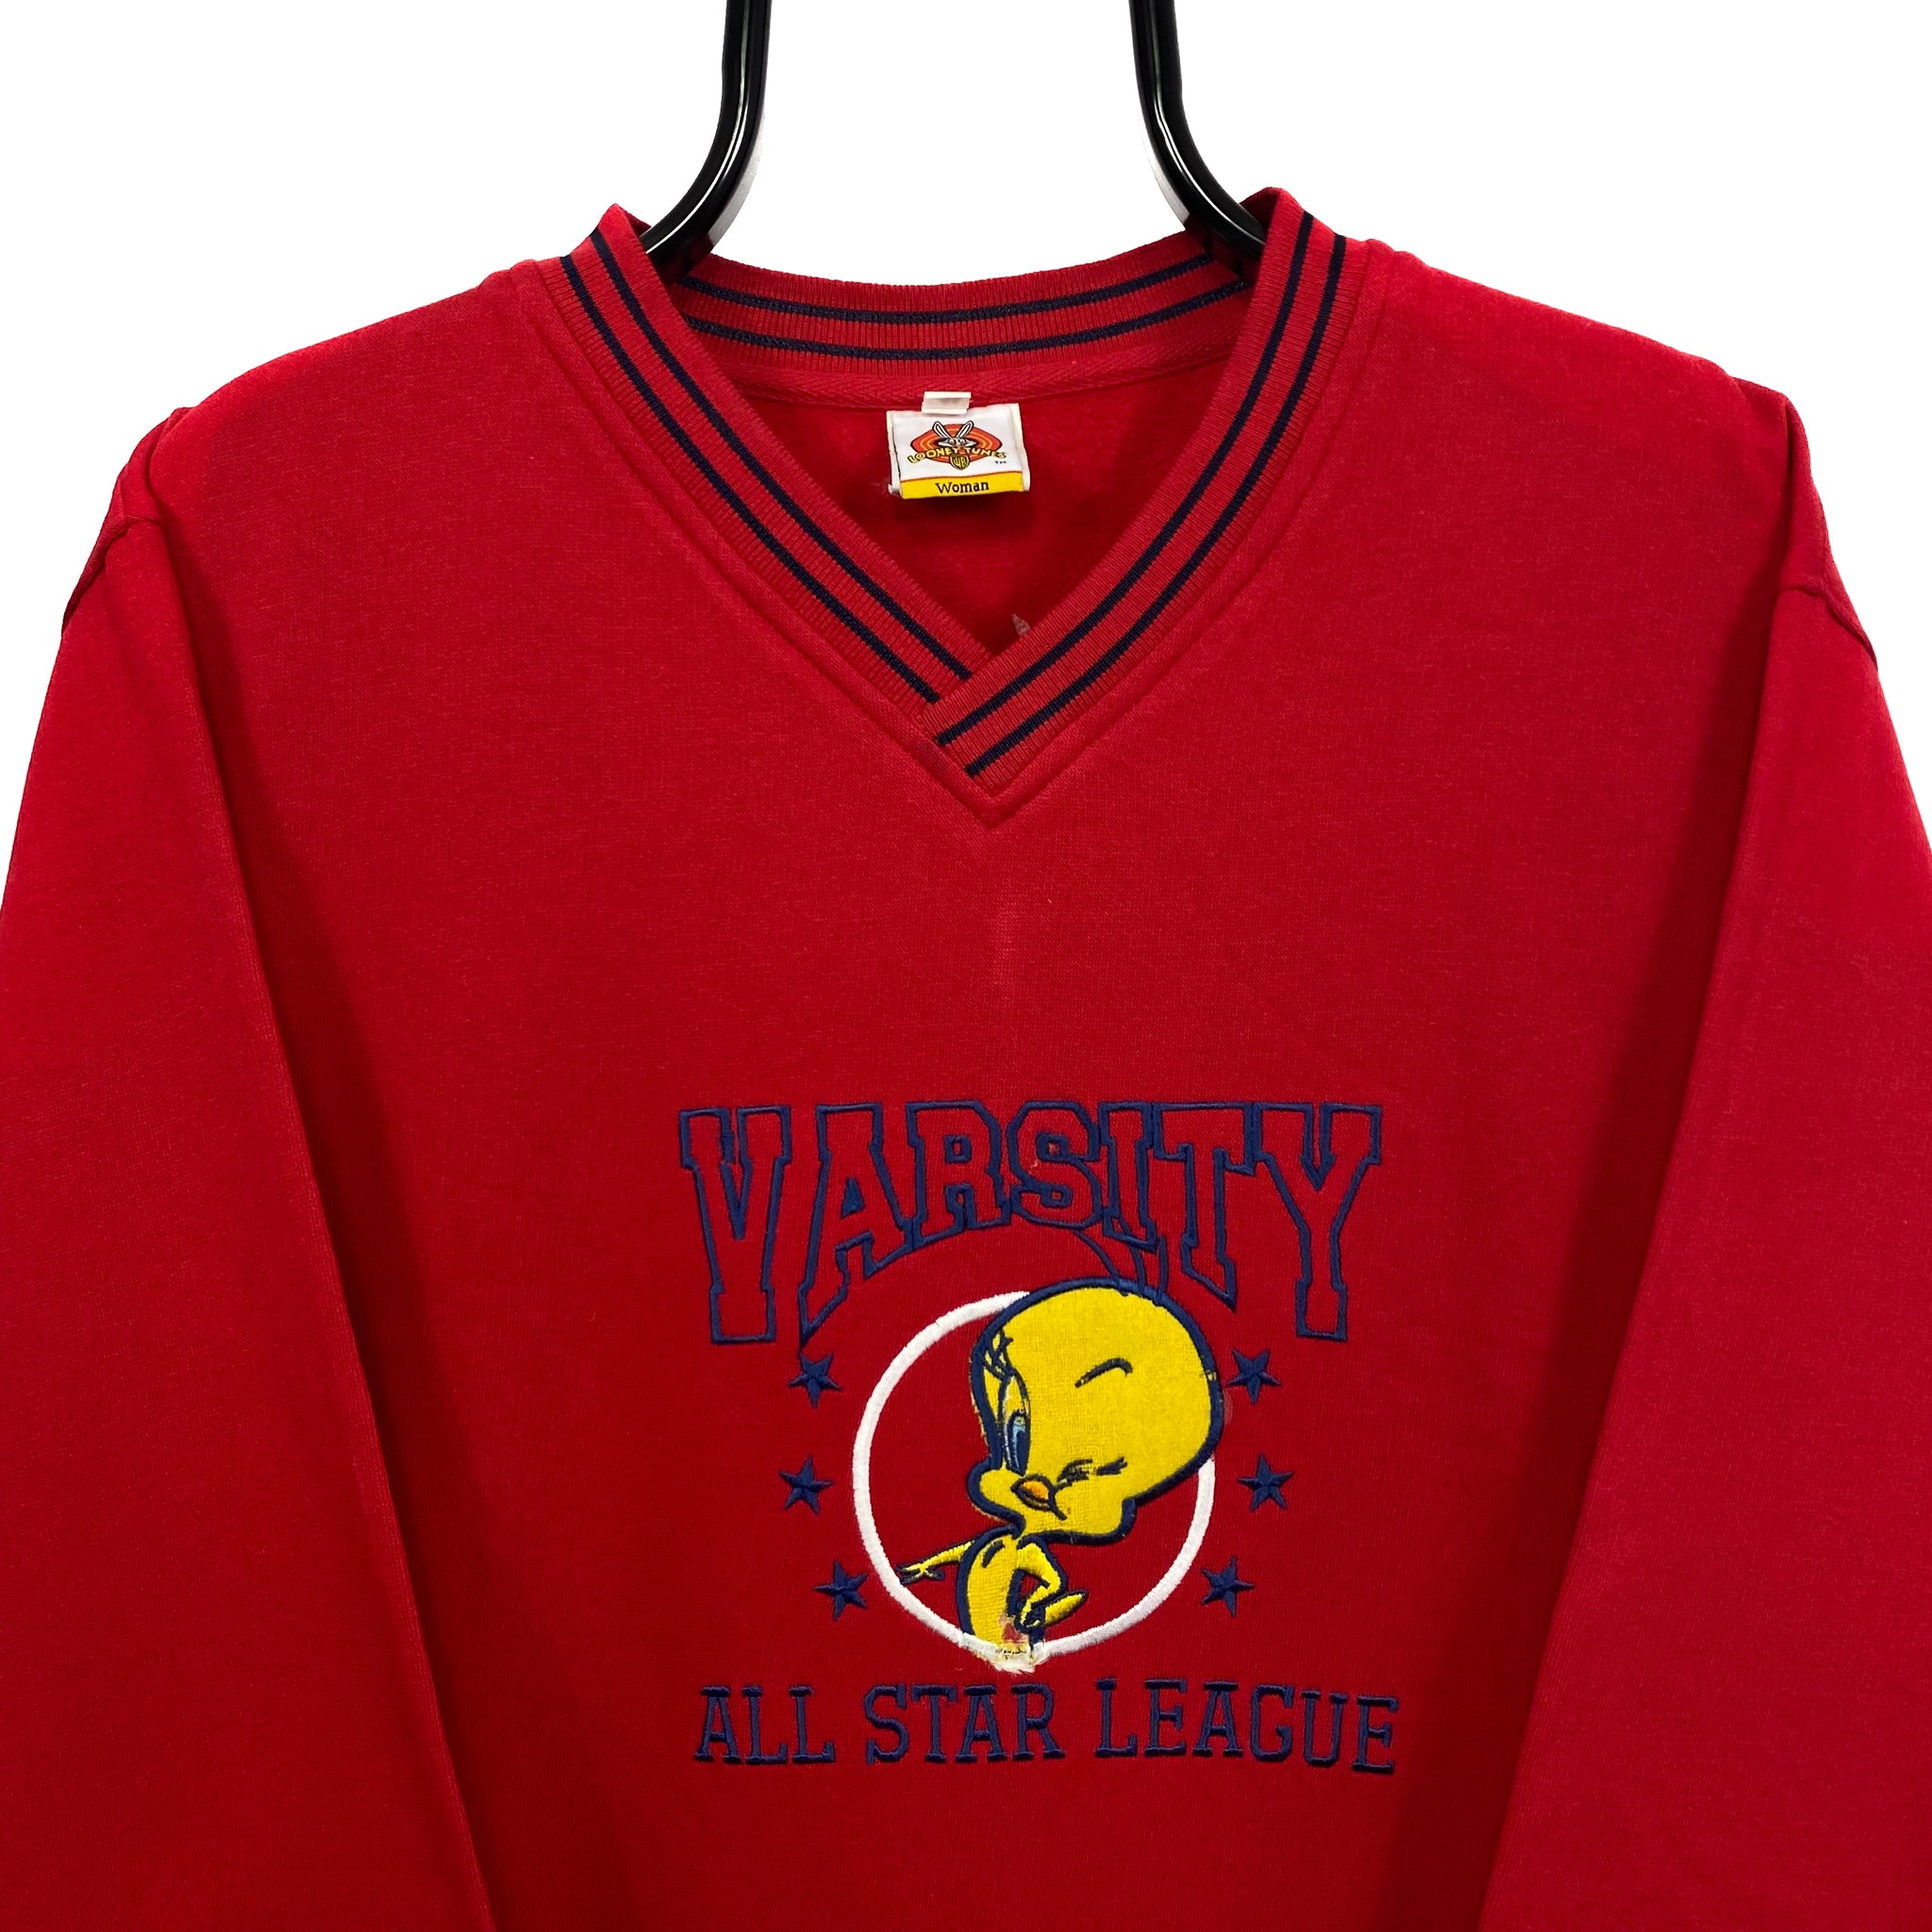 LOONEY All – Embroidered (2001) V-Nec Tweety VTG TUNES “Varsity Star League” George Worgan